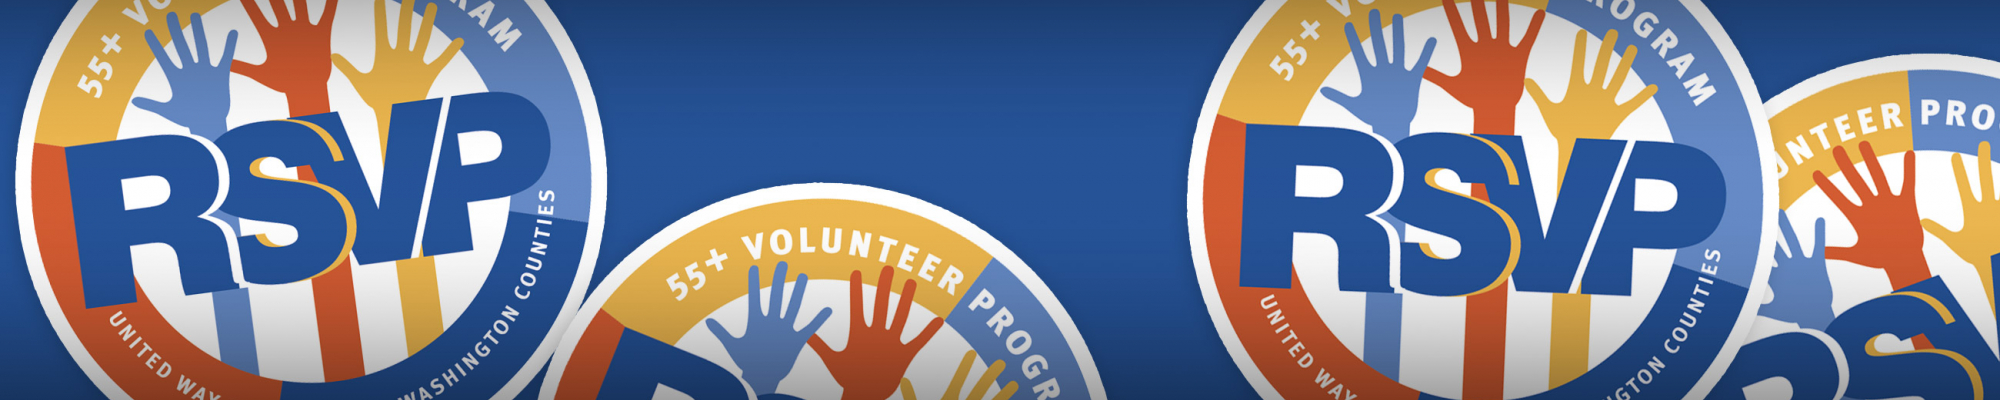 55+ Volunteer Program RSVP logos